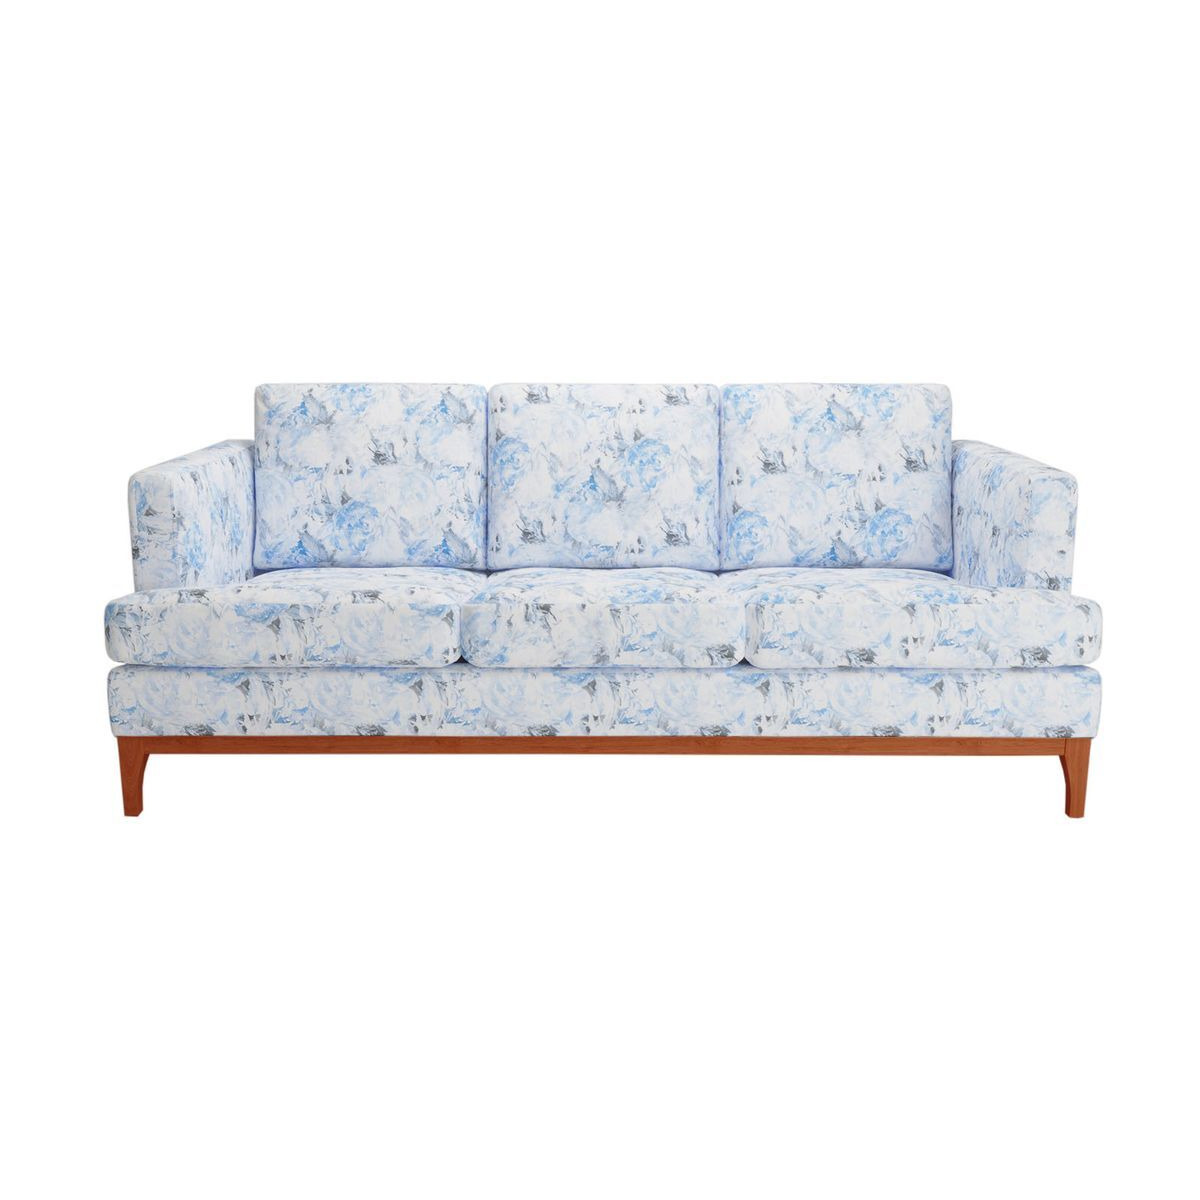 Scarlett Design 3 Seater Sofa, blue, Leg colour: aveo - image 1